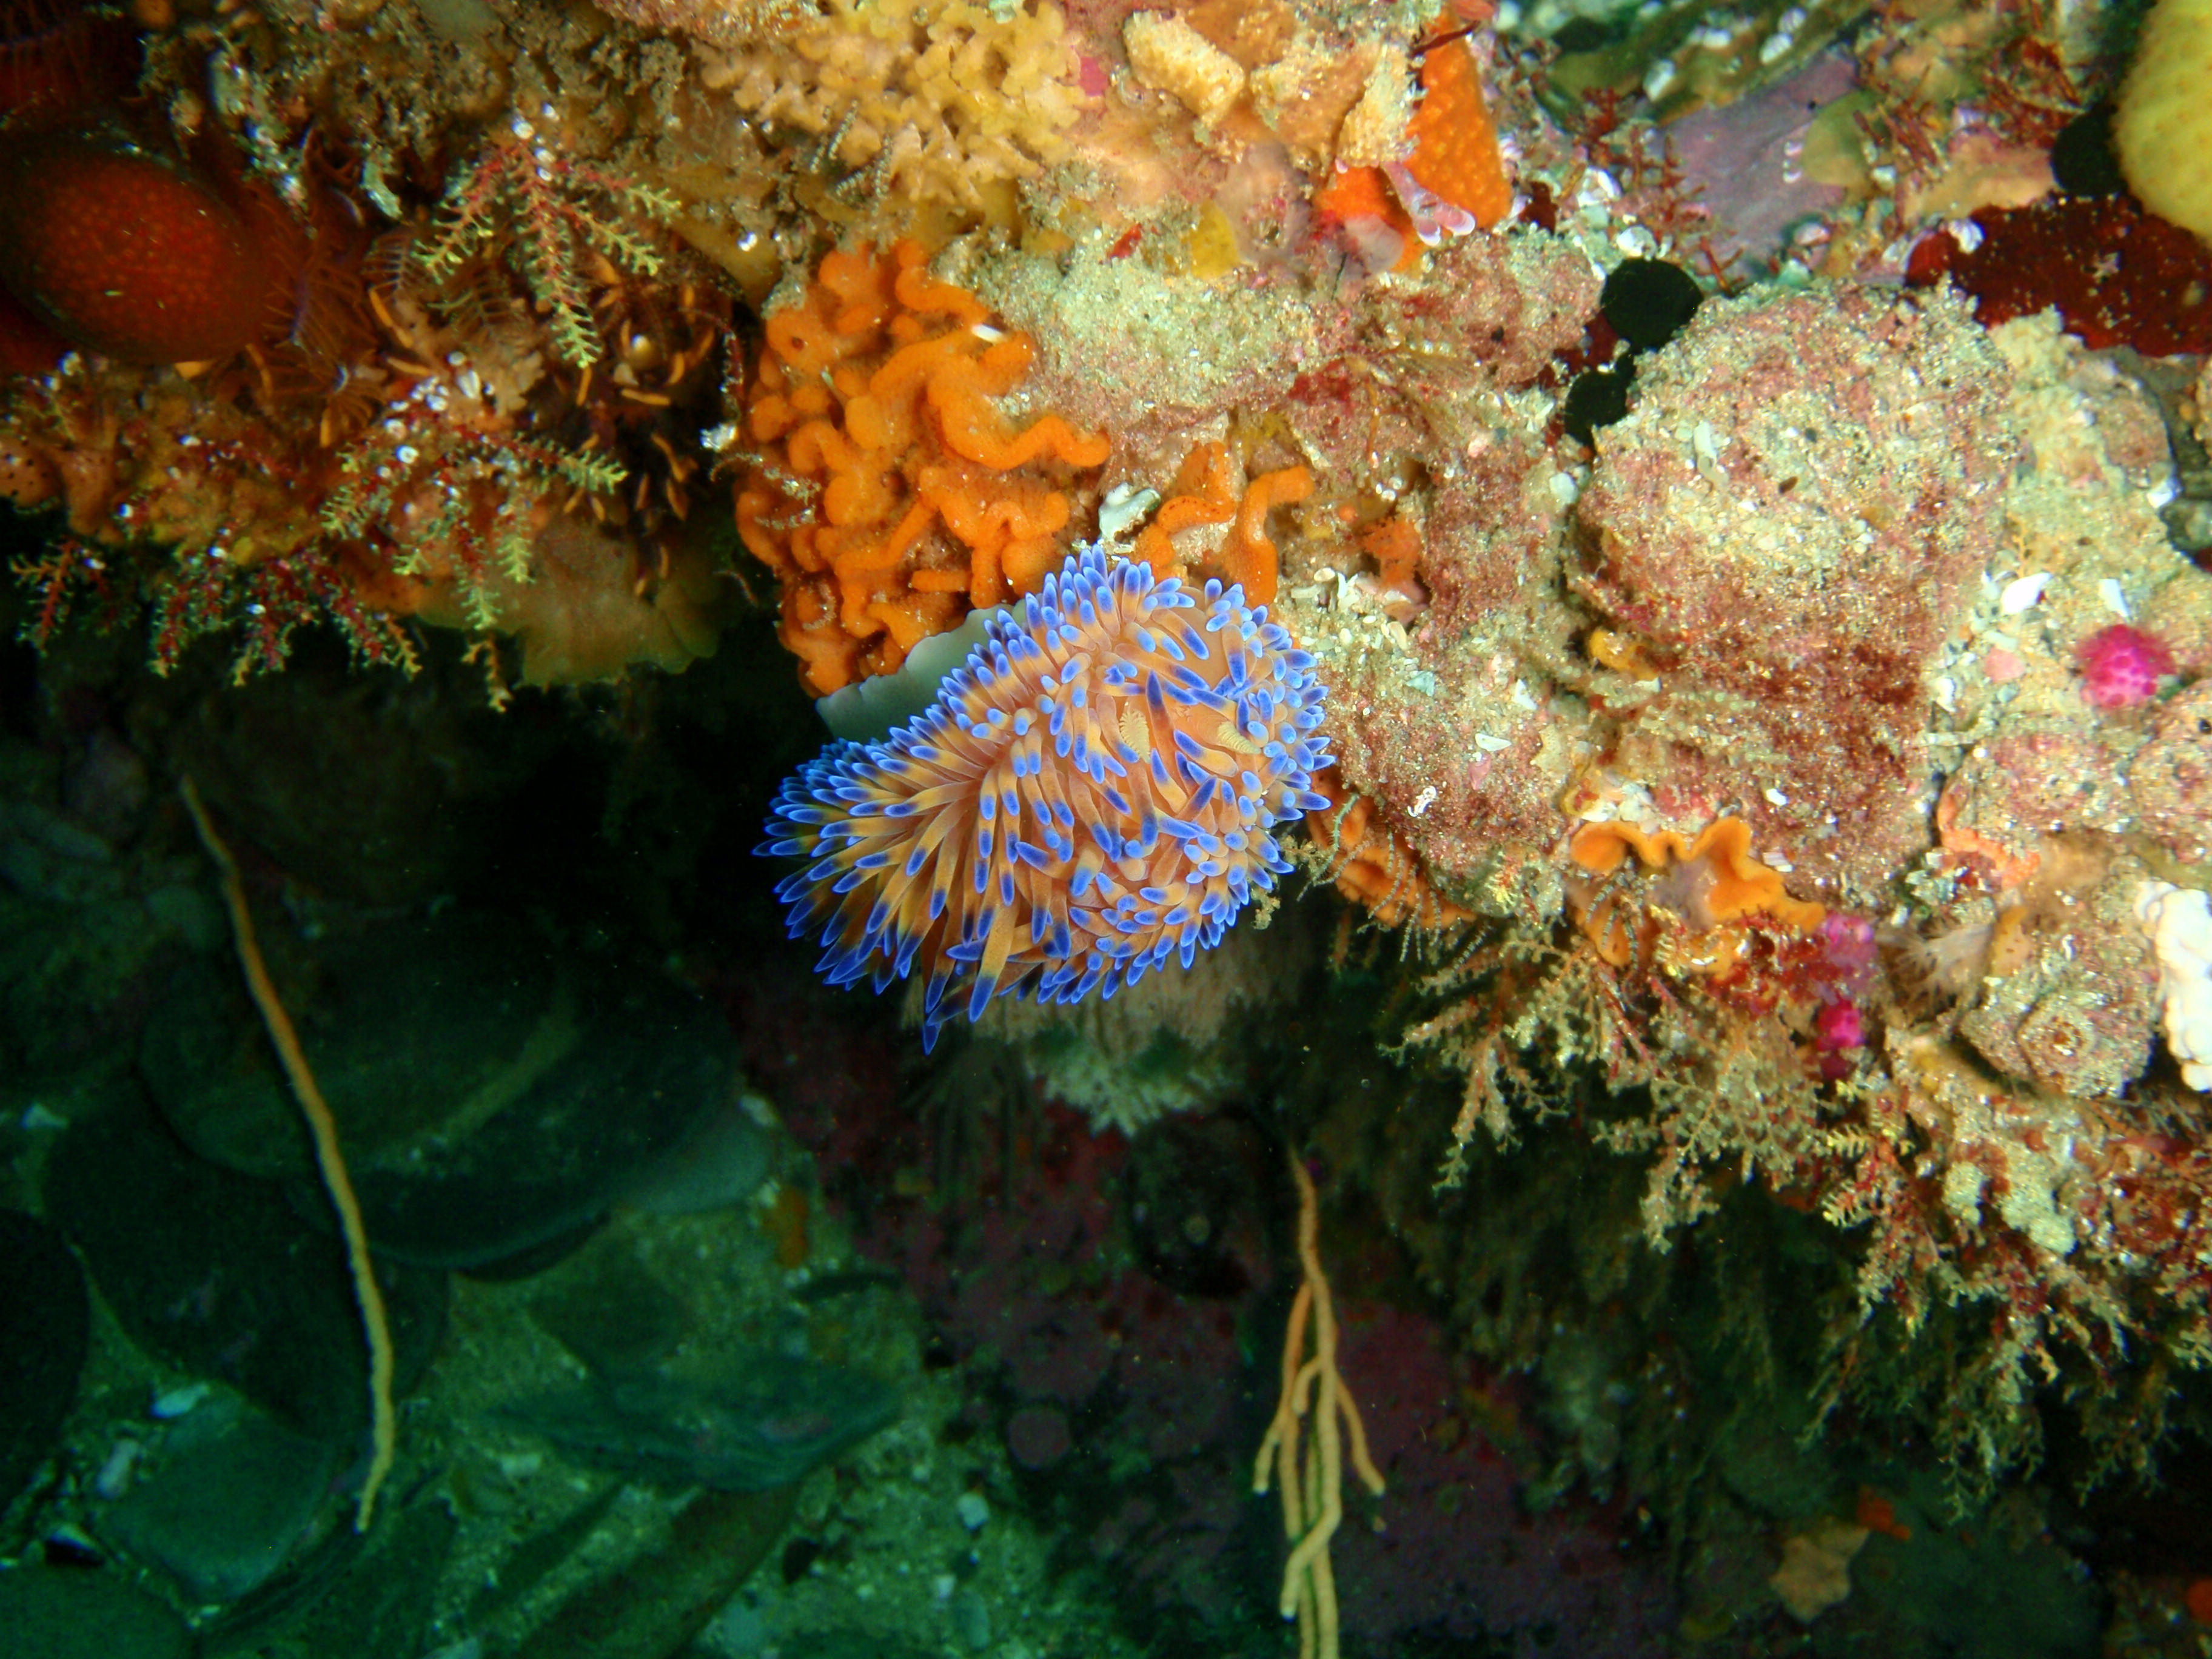 Gas flame nudibranch at Rheeder's Reef P2277157